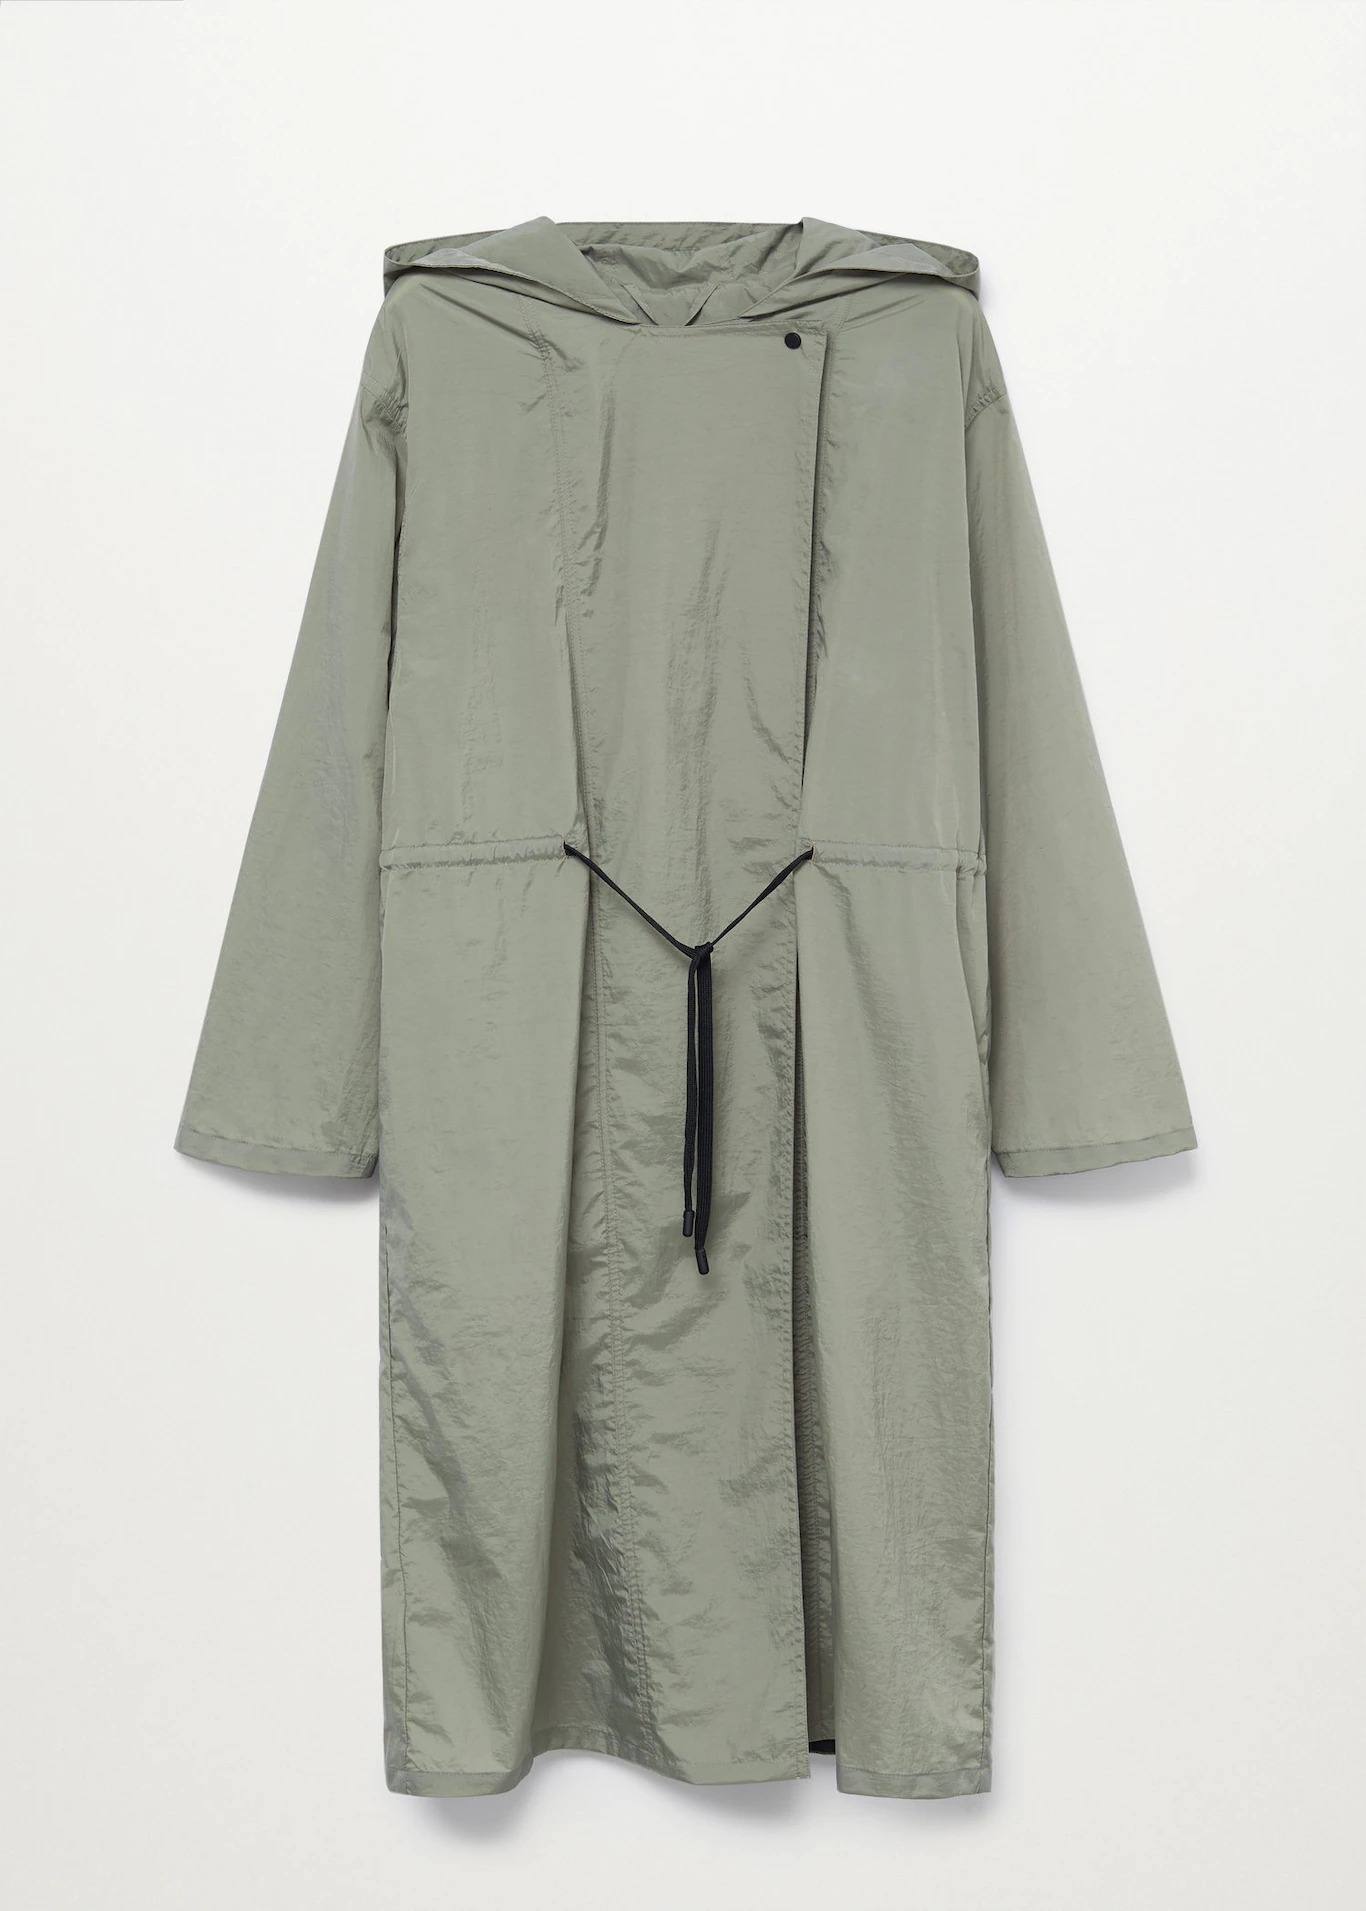 Mango 87065674 Foldaway water-repellent raincoat size XS-S8